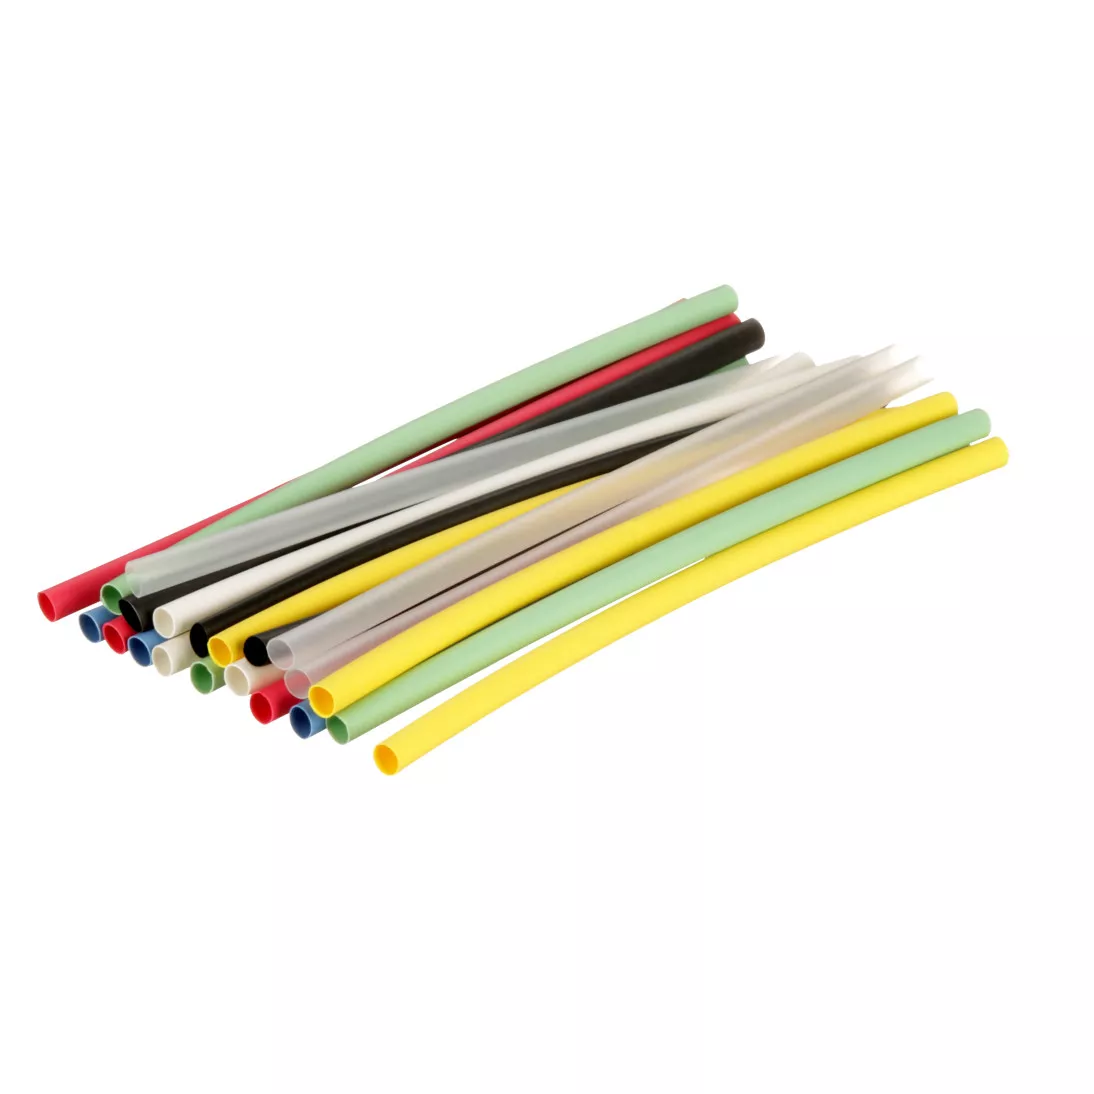 3M™ Heat Shrink Tubing Assortment Pack FP-301-3/16-Assort colors, PN
36620, 3 each of 7 colors, 10 packs/case